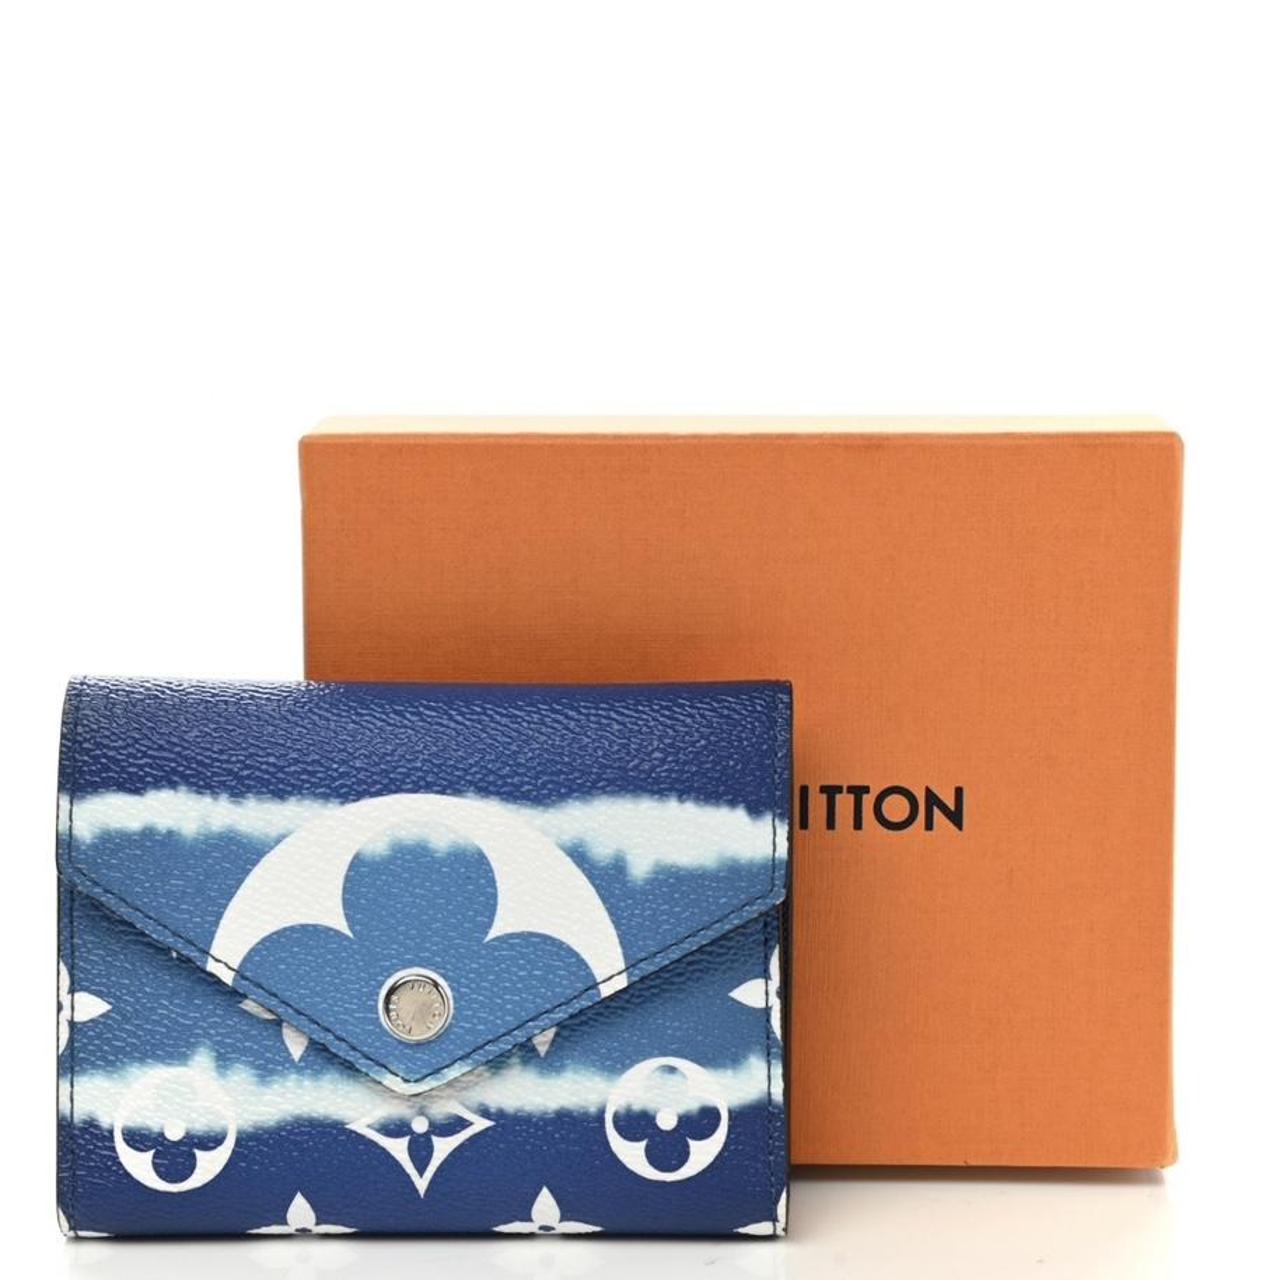 Louis Vuitton Victorine Wallet Limited Edition - Depop